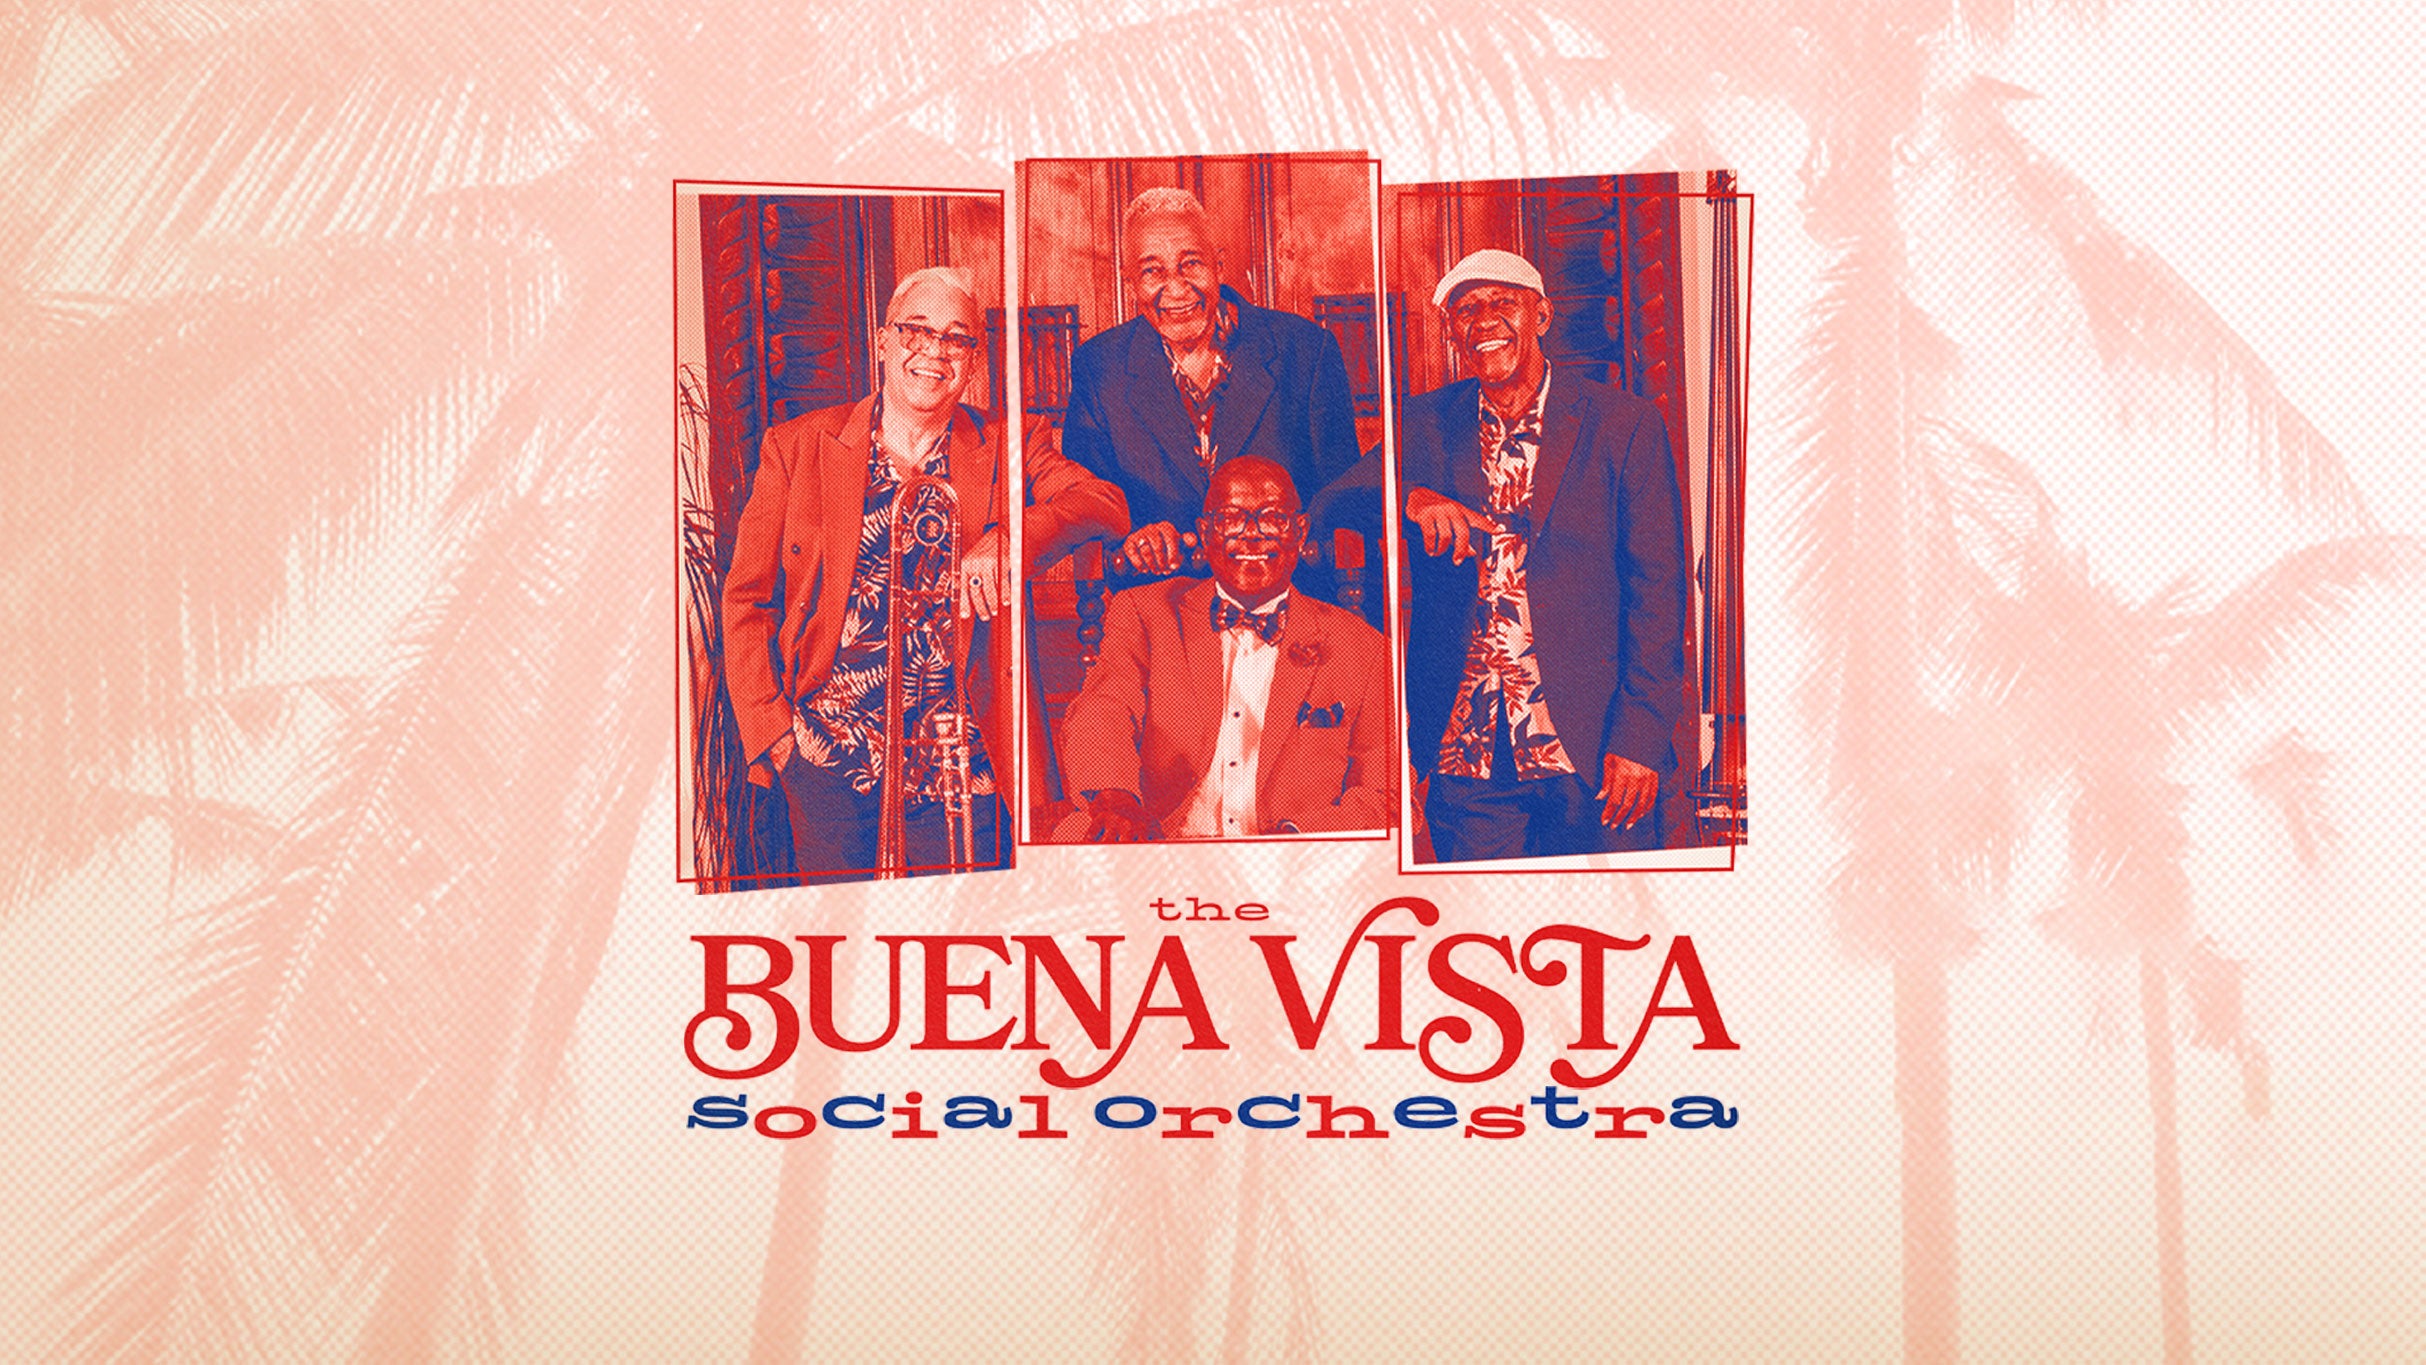 Buena Vista Social Orchestra at The Magnolia